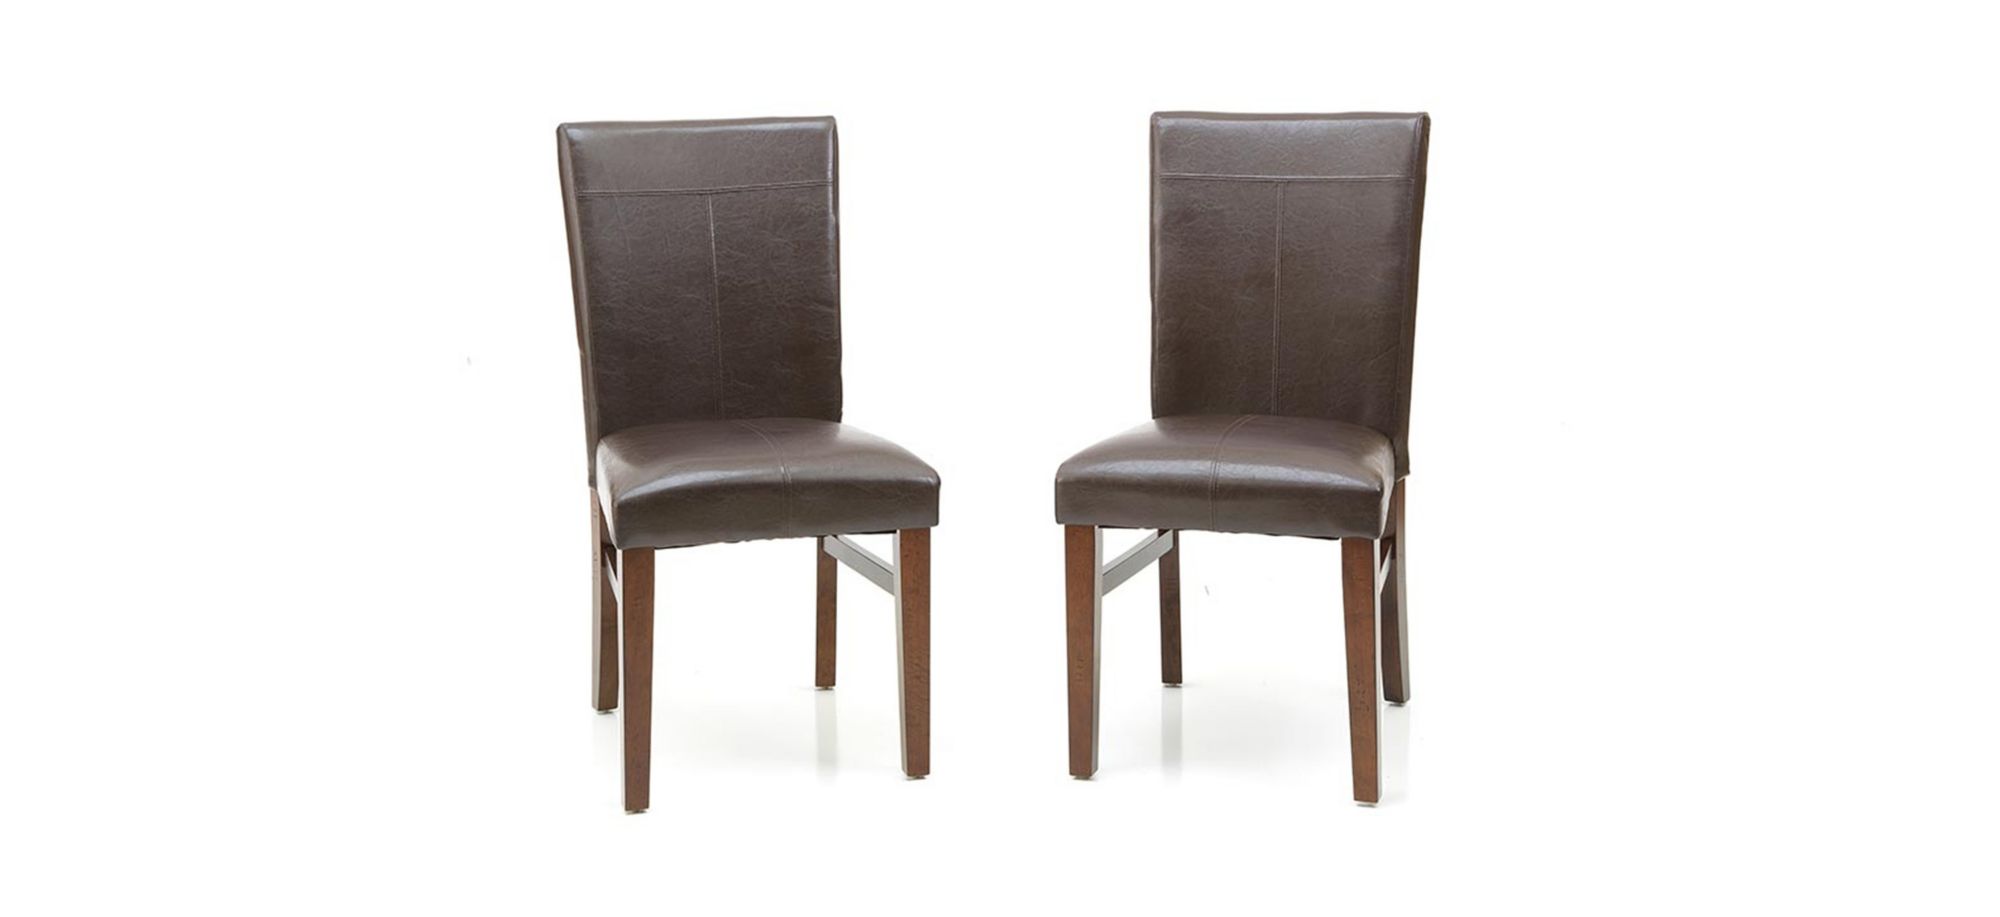 Kona Upholstered Chair - Set of 2 in Merlot by Intercon